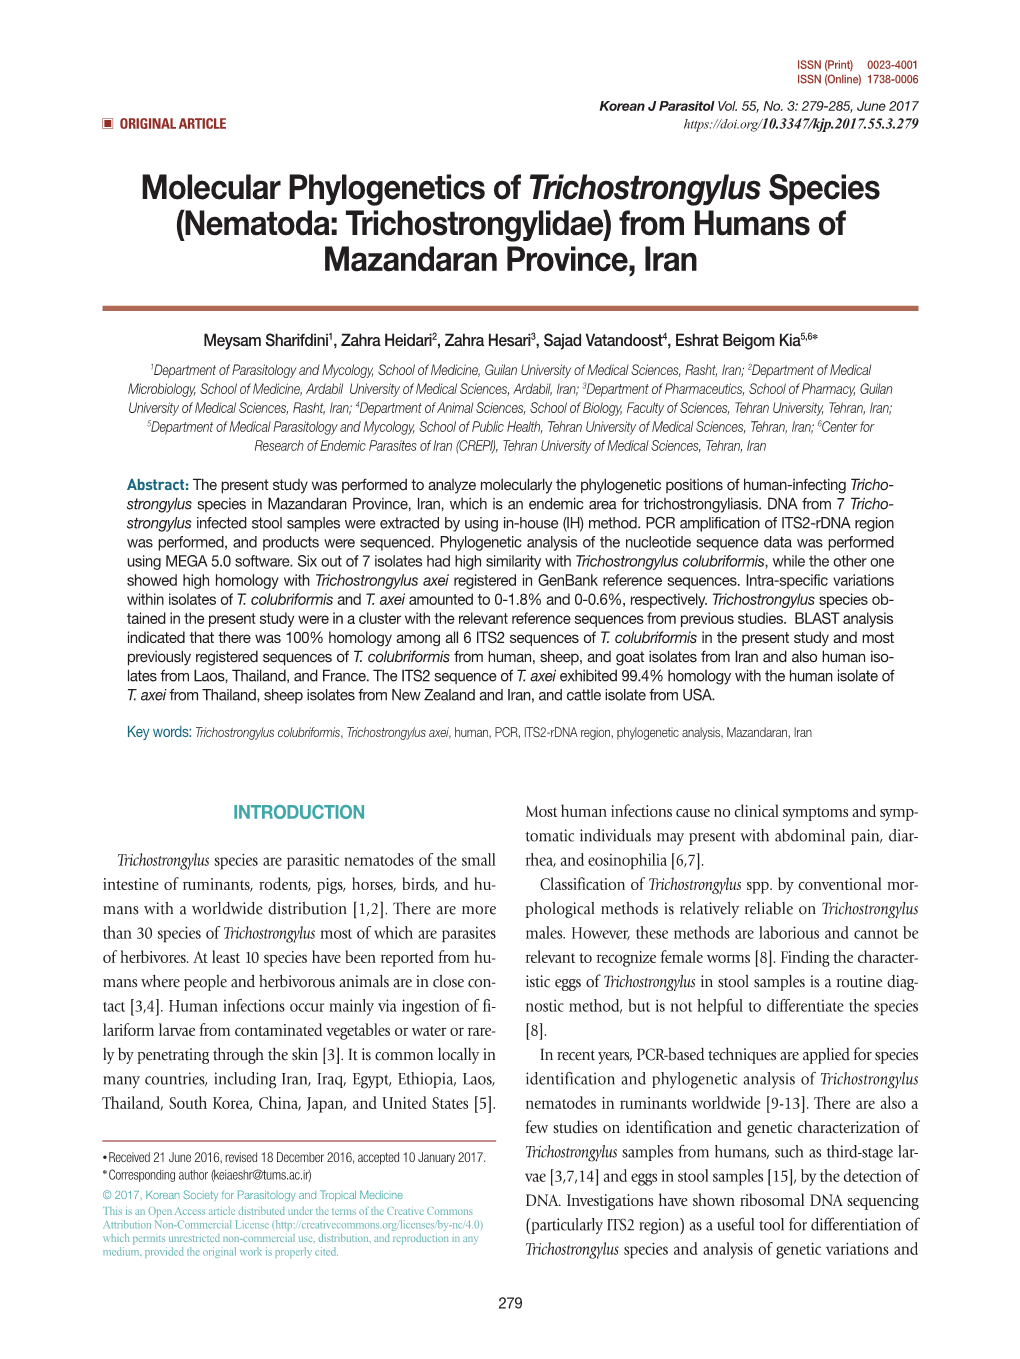 Molecular Phylogenetics of Trichostrongylus Species (Nematoda: Trichostrongylidae) from Humans of Mazandaran Province, Iran